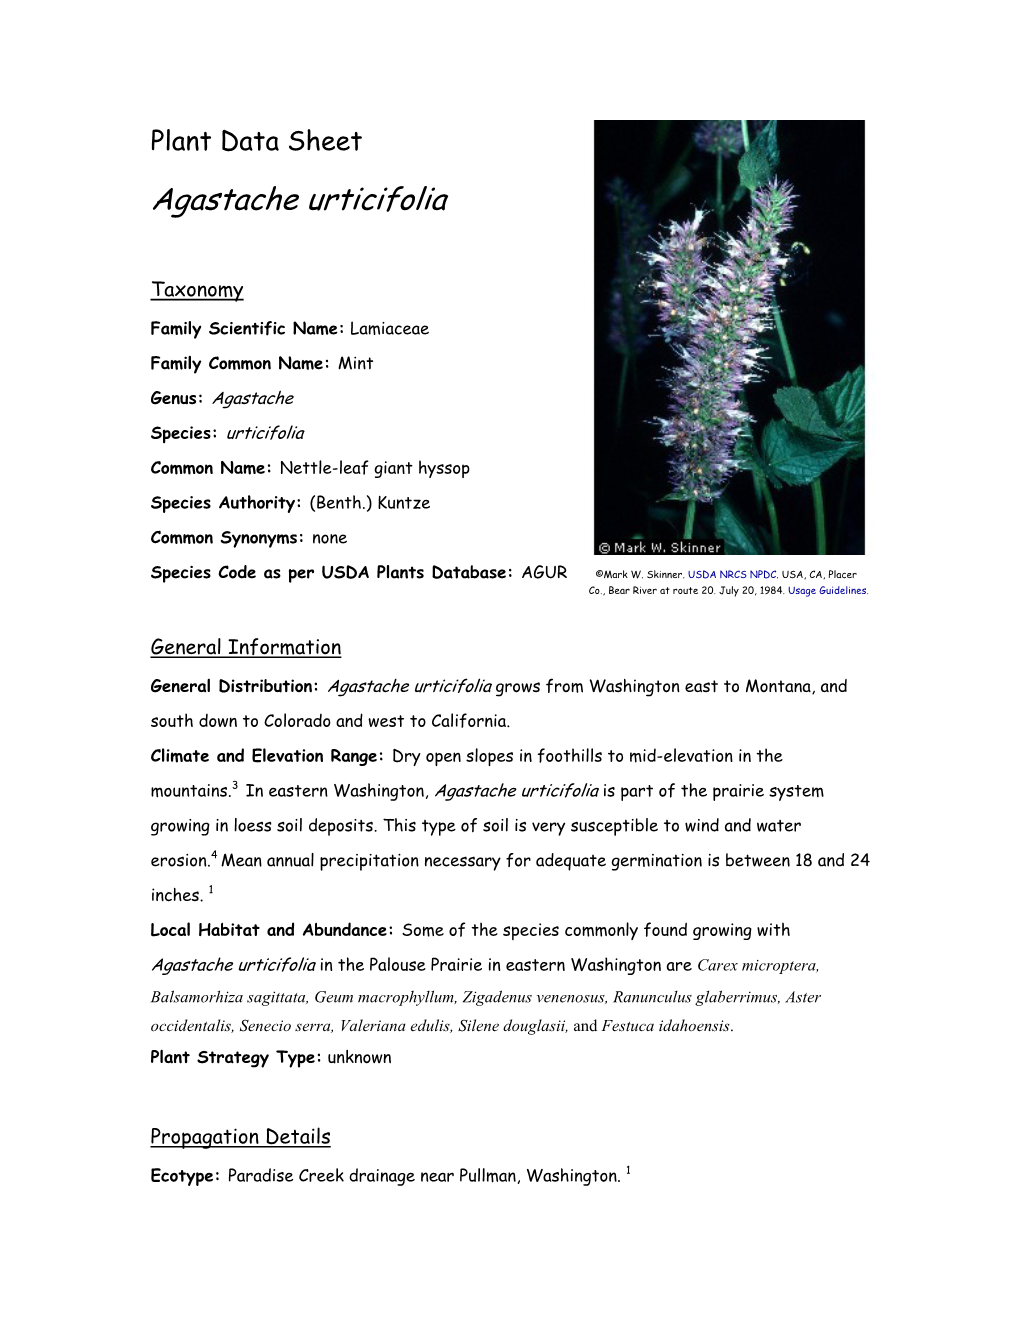 Agastache Urticifolia